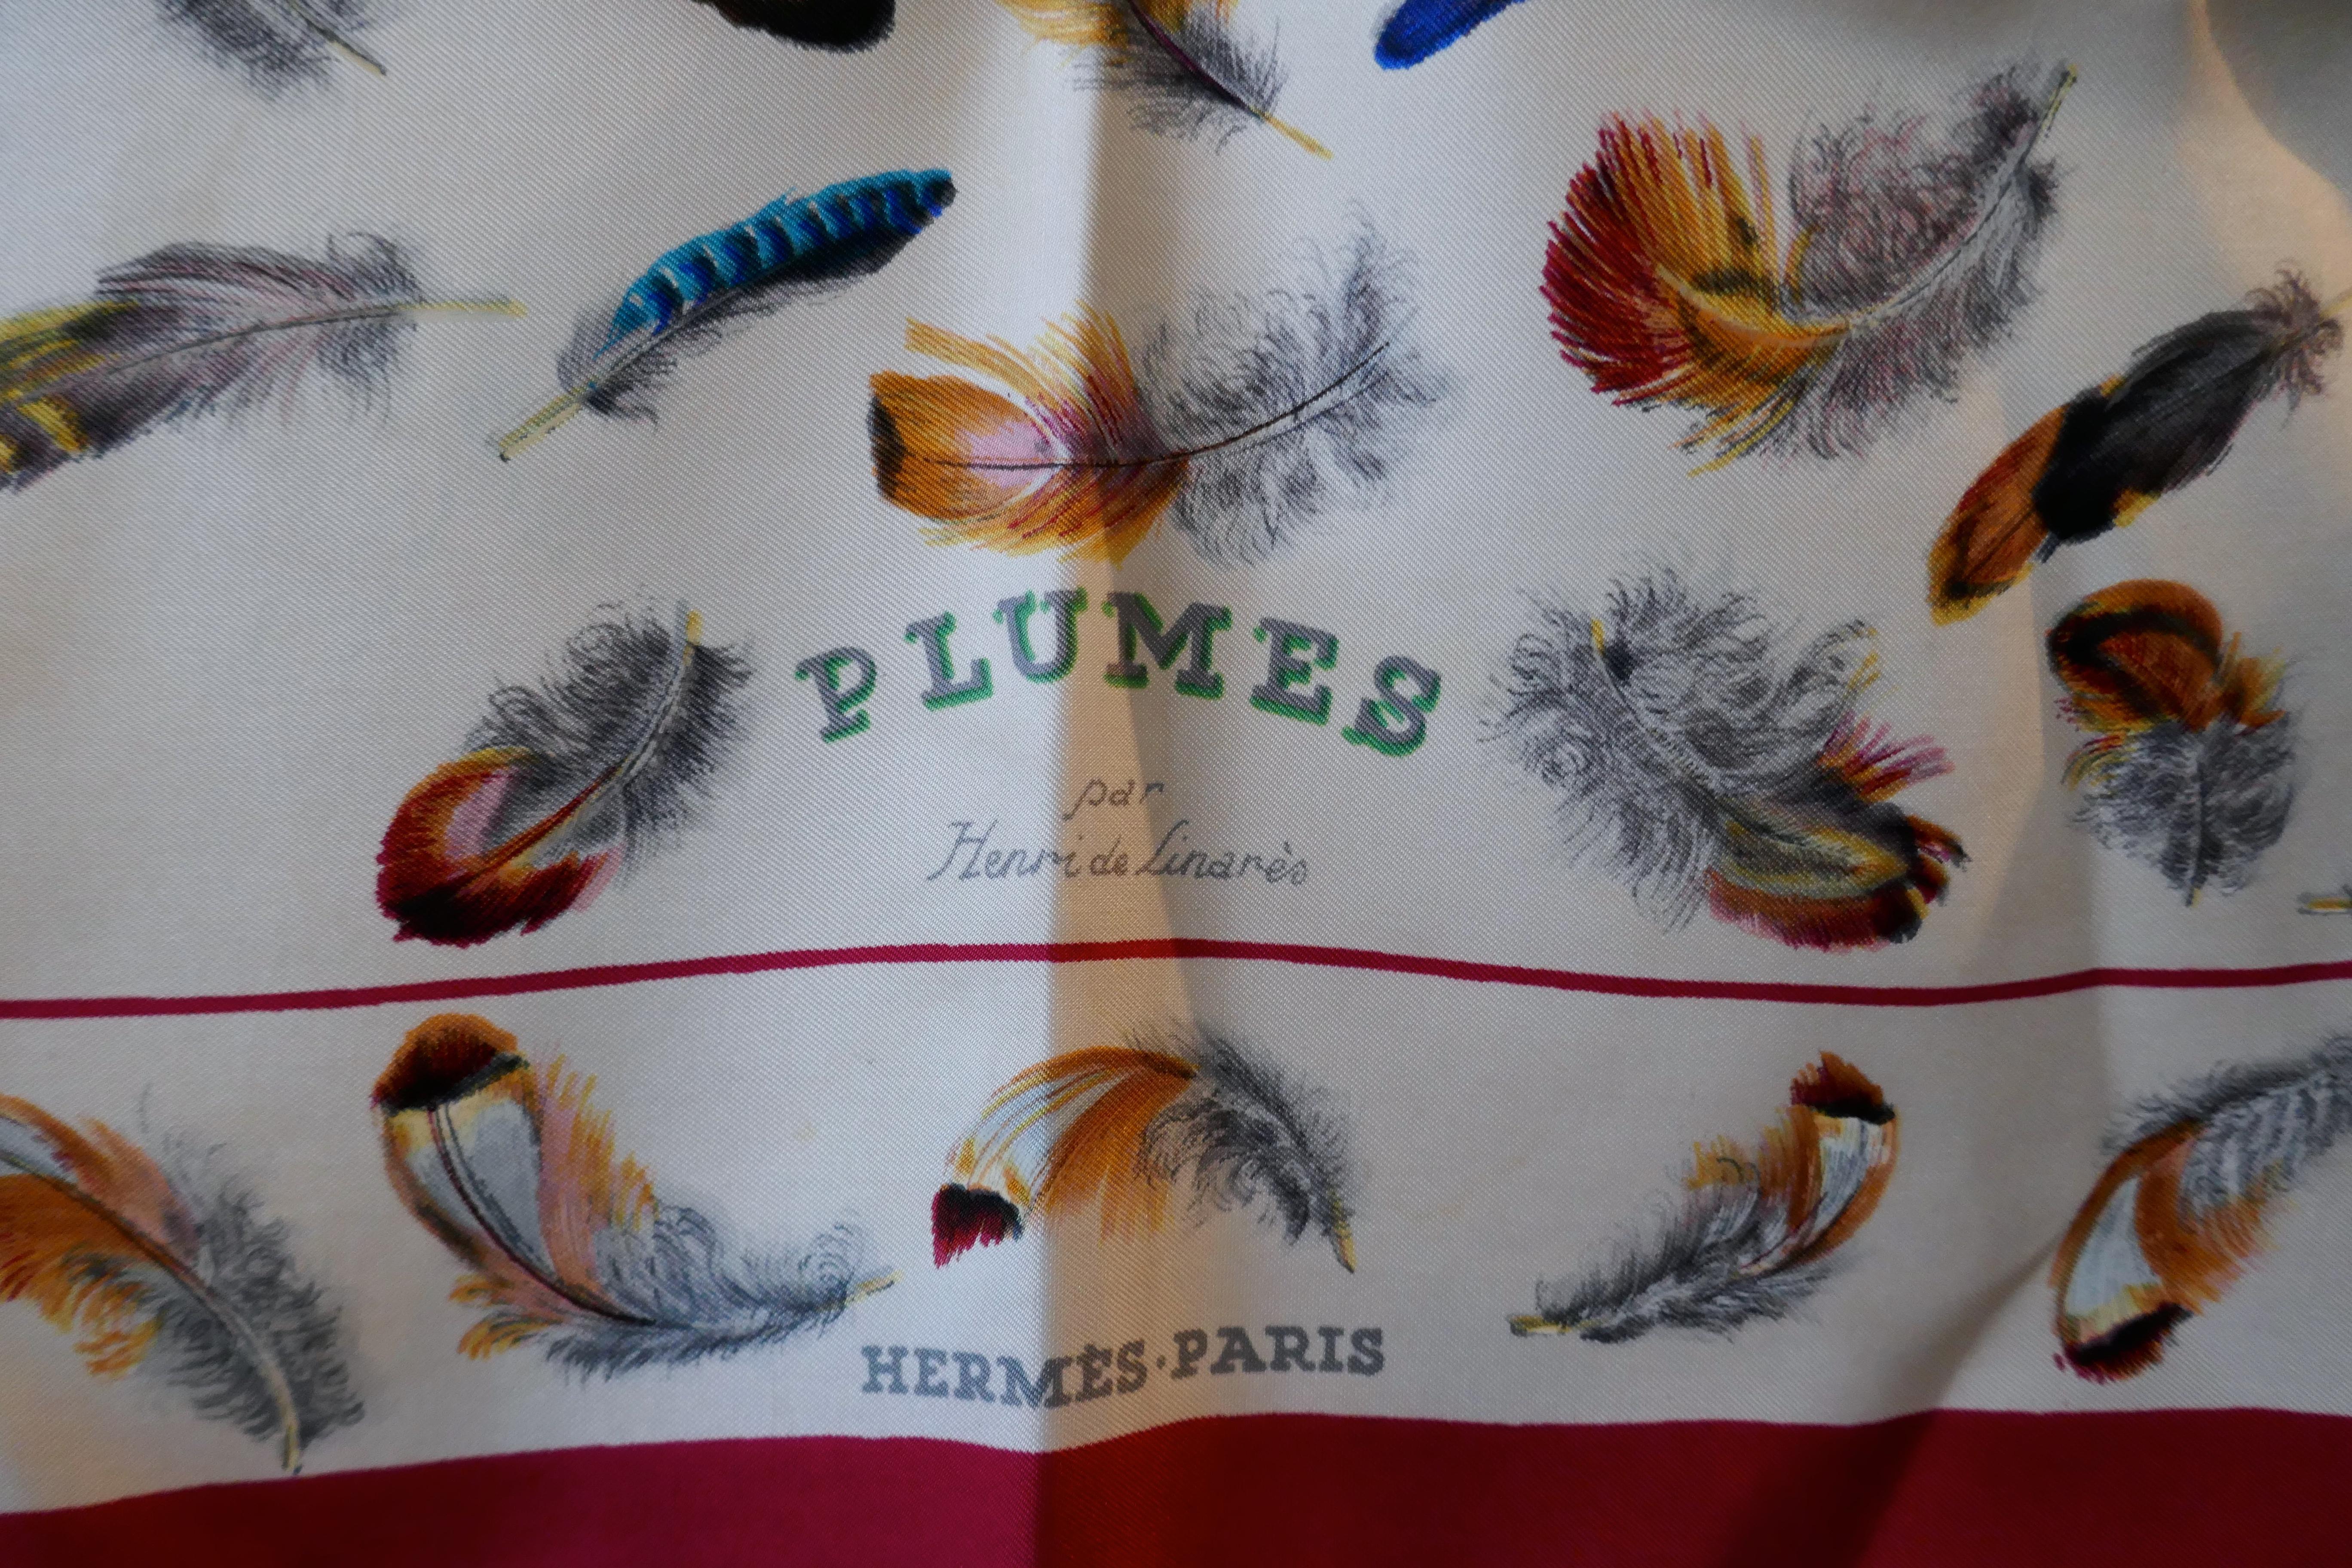 HERMÈS Vintage Silk Scarf design by Henri de Linares “Plumes” 100% Silk Scarf,  1